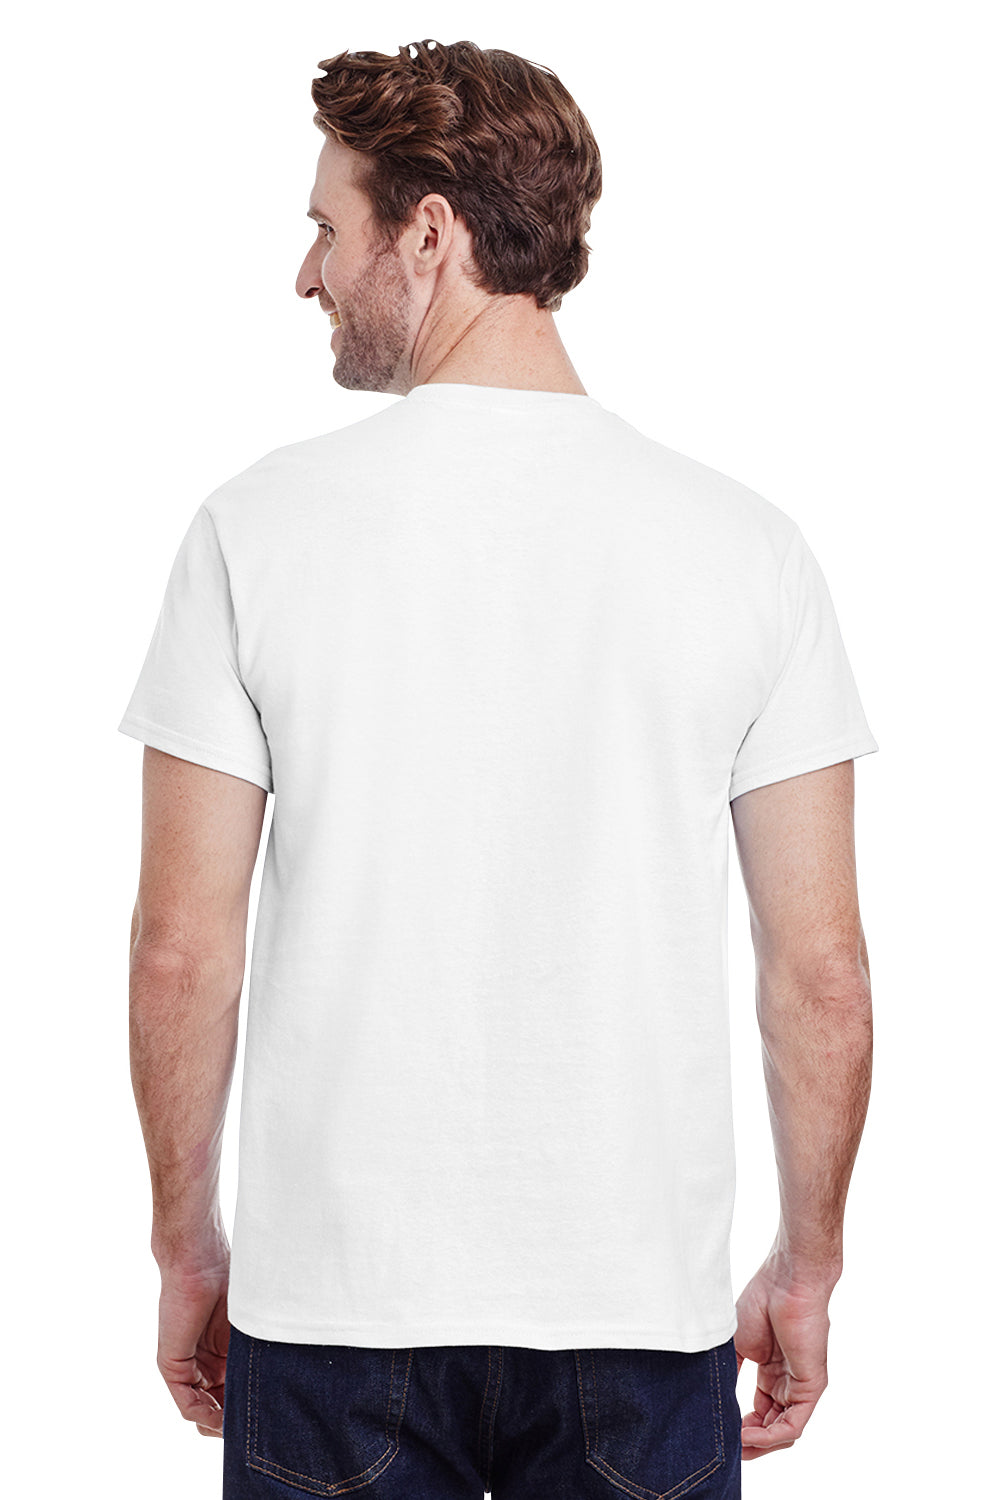 Gildan G200 Mens Ultra Short Sleeve Crewneck T-Shirt White Back